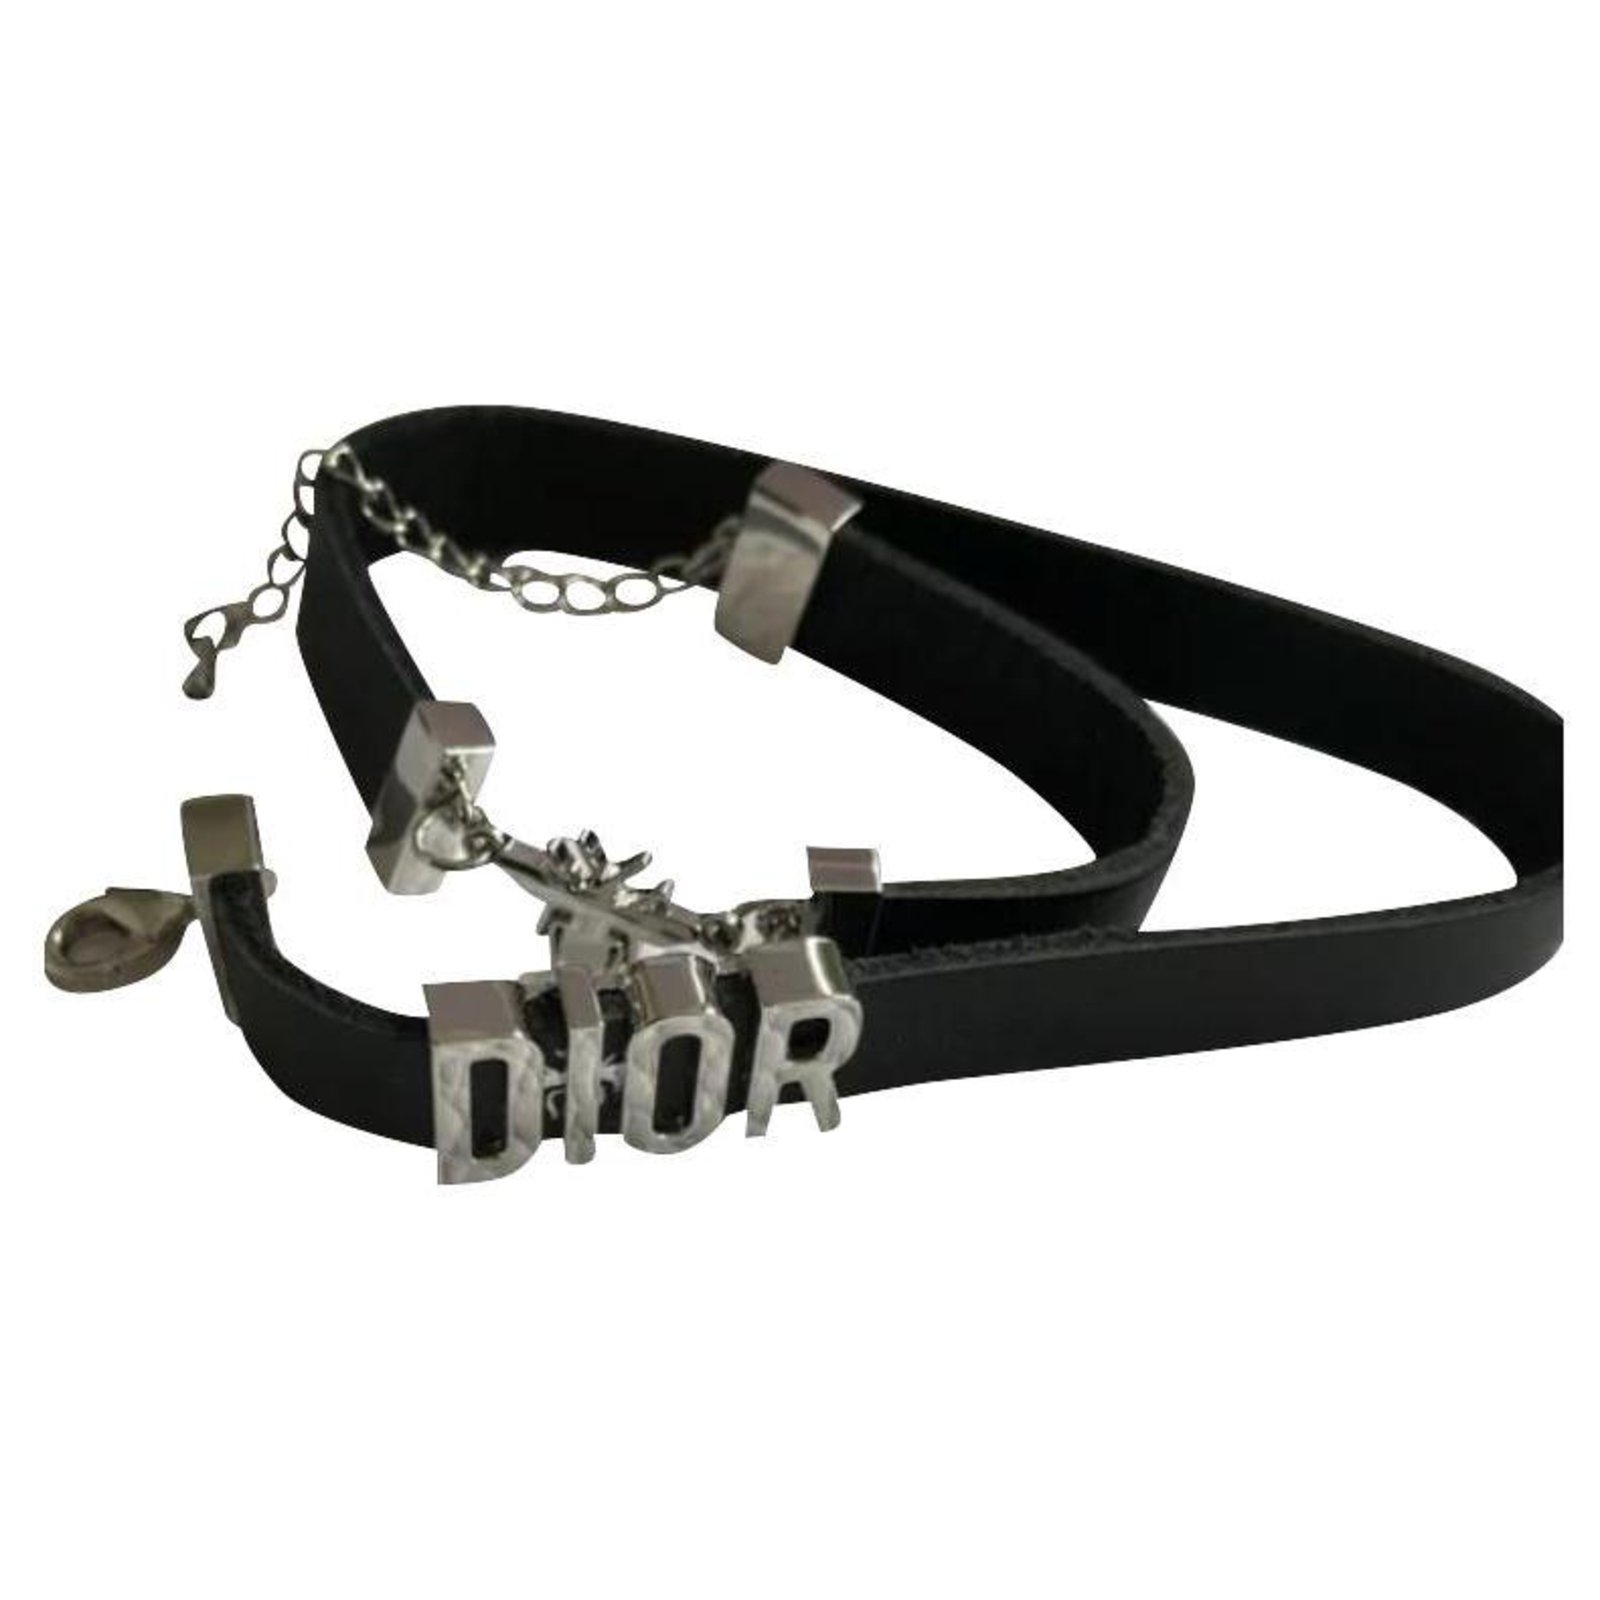 Dior Bracelet Homme elastic with metal round CD element VIP GIFT RARE  eBay